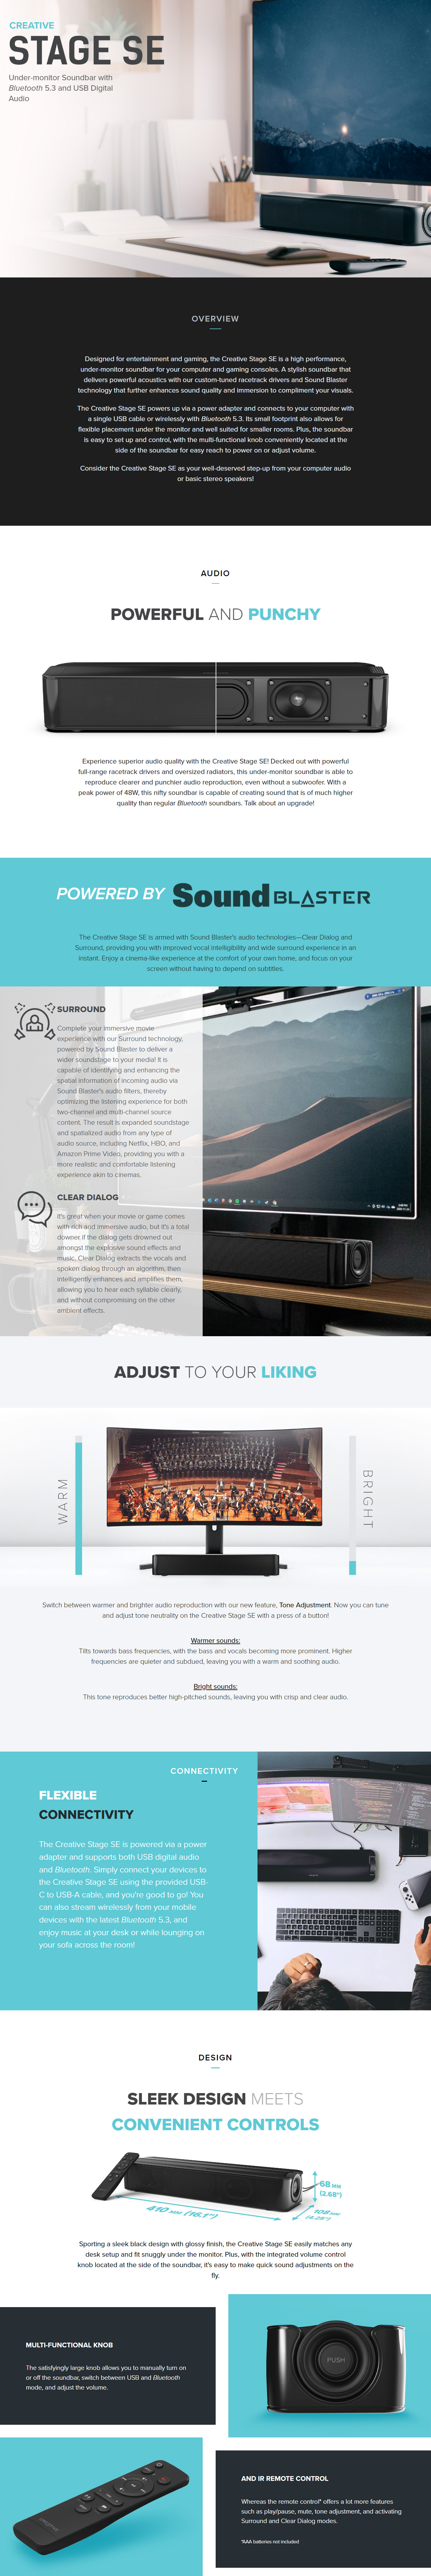 Speakers-Creative-Stage-SE-Under-Monitor-Soundbar-Black-1